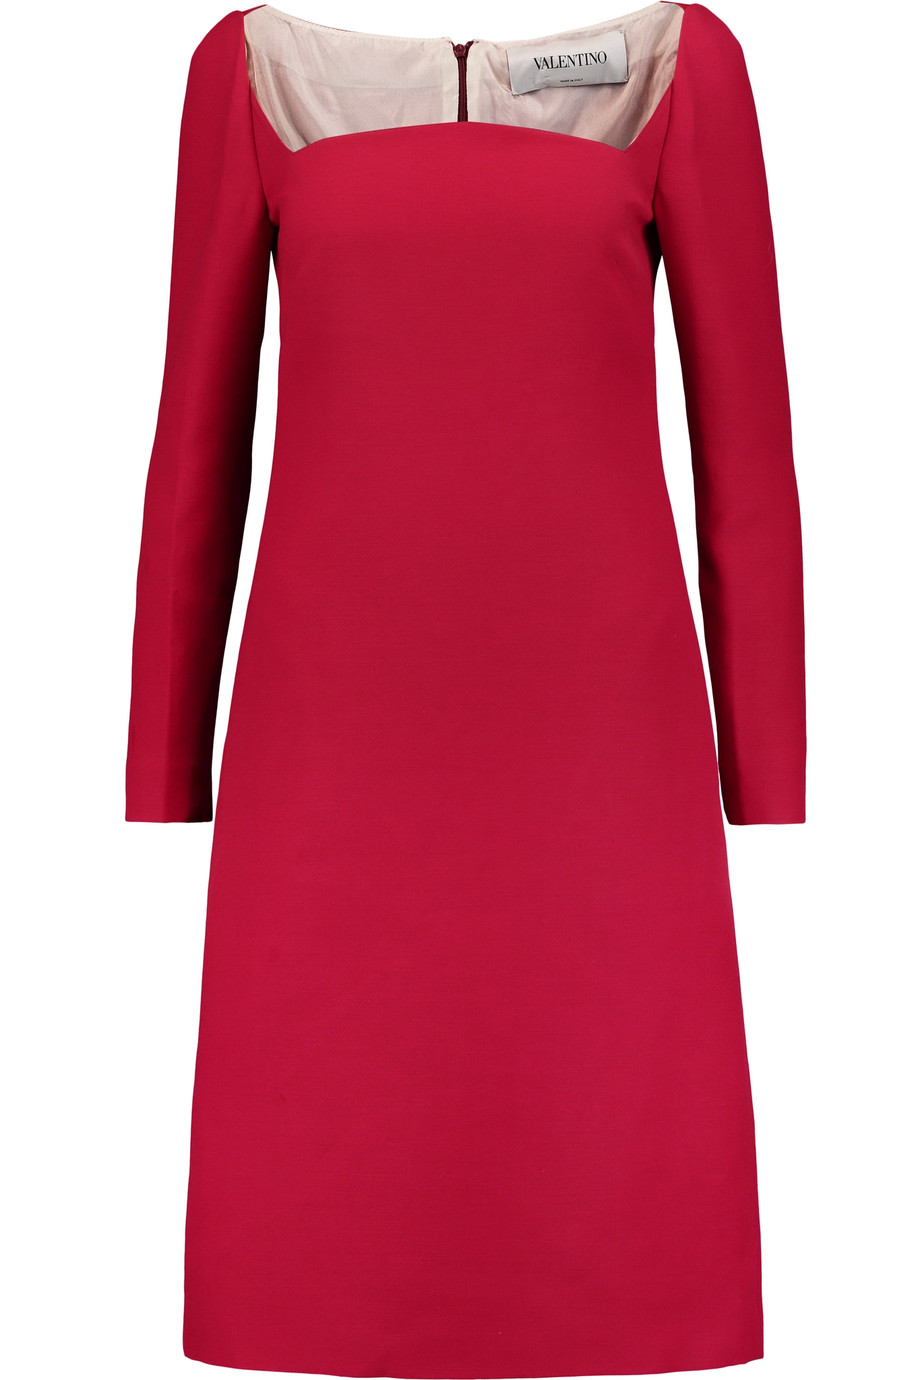 Valentino Wool And Silk-blend Midi Dress | ModeSens